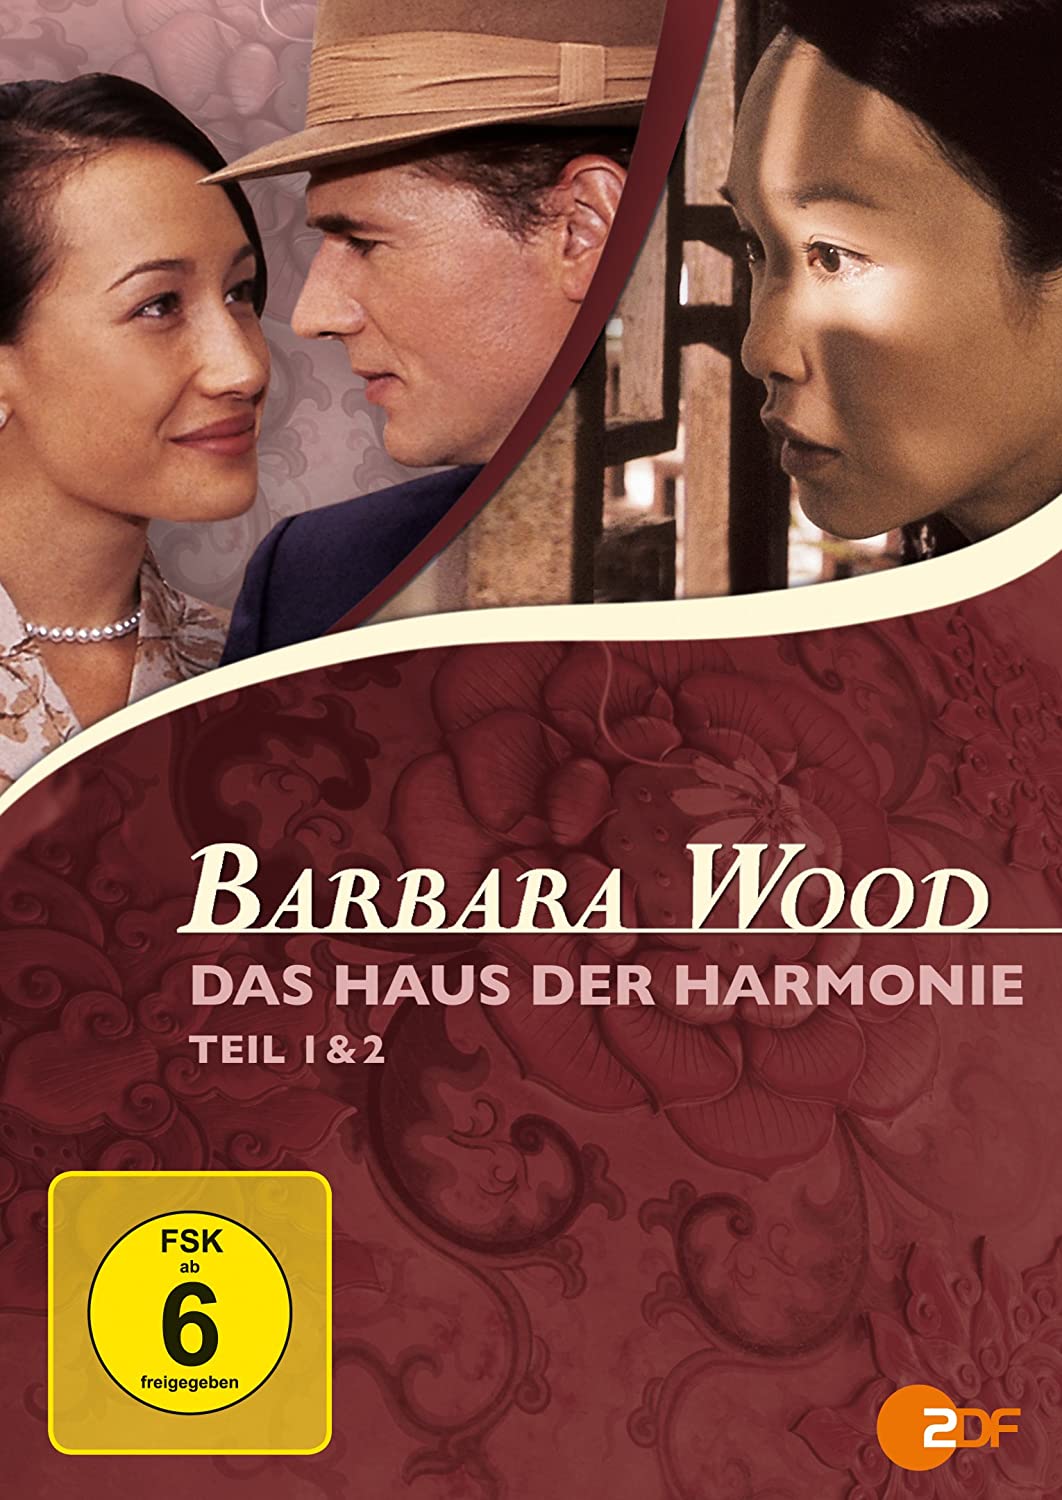 Barbara Wood: Das Haus der Harmonie, Teil 1&2